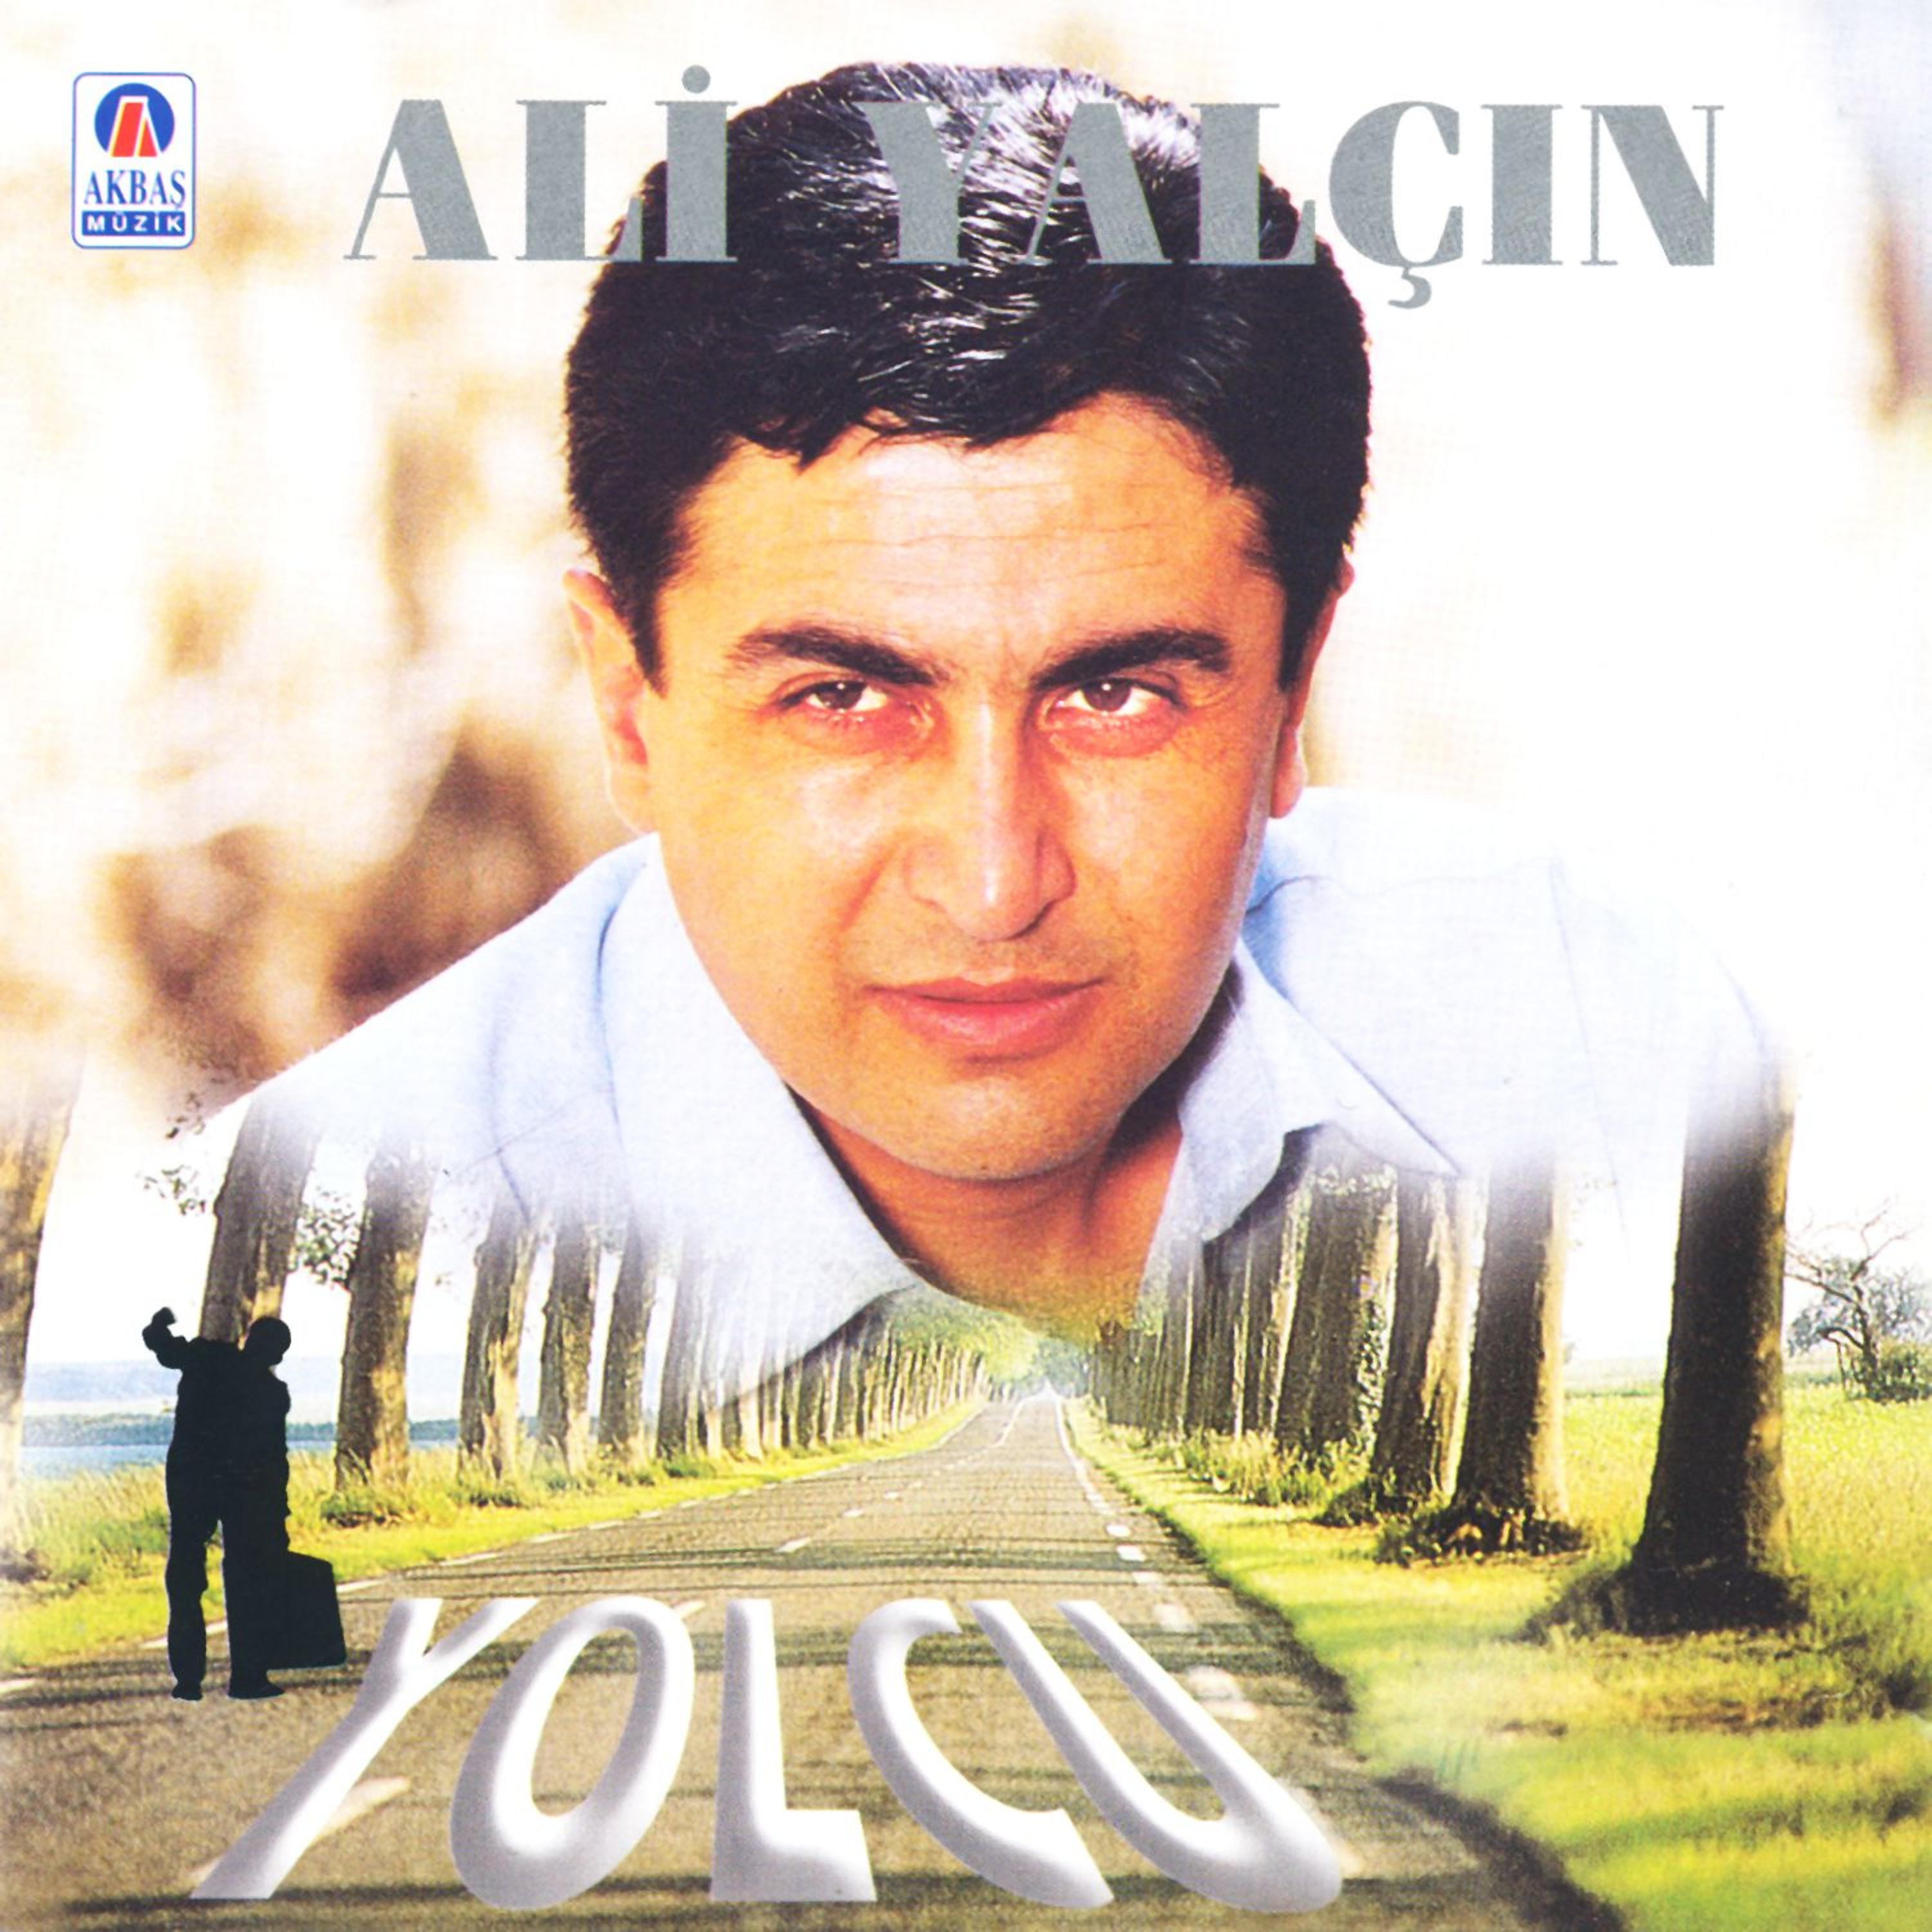 Постер альбома Yolcu